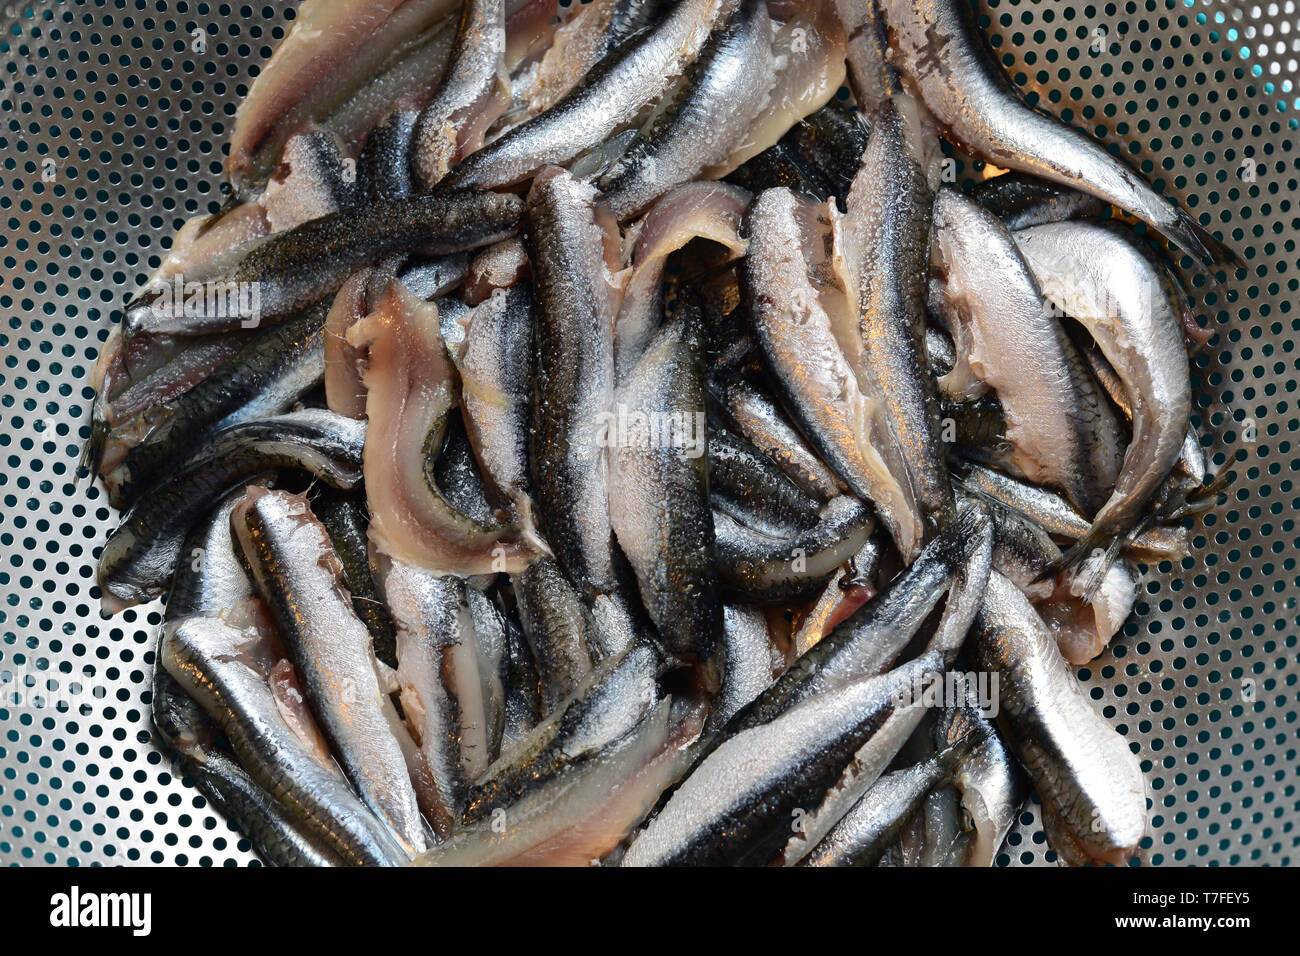 Anchovy fish preparation at home close up view Stock Photo